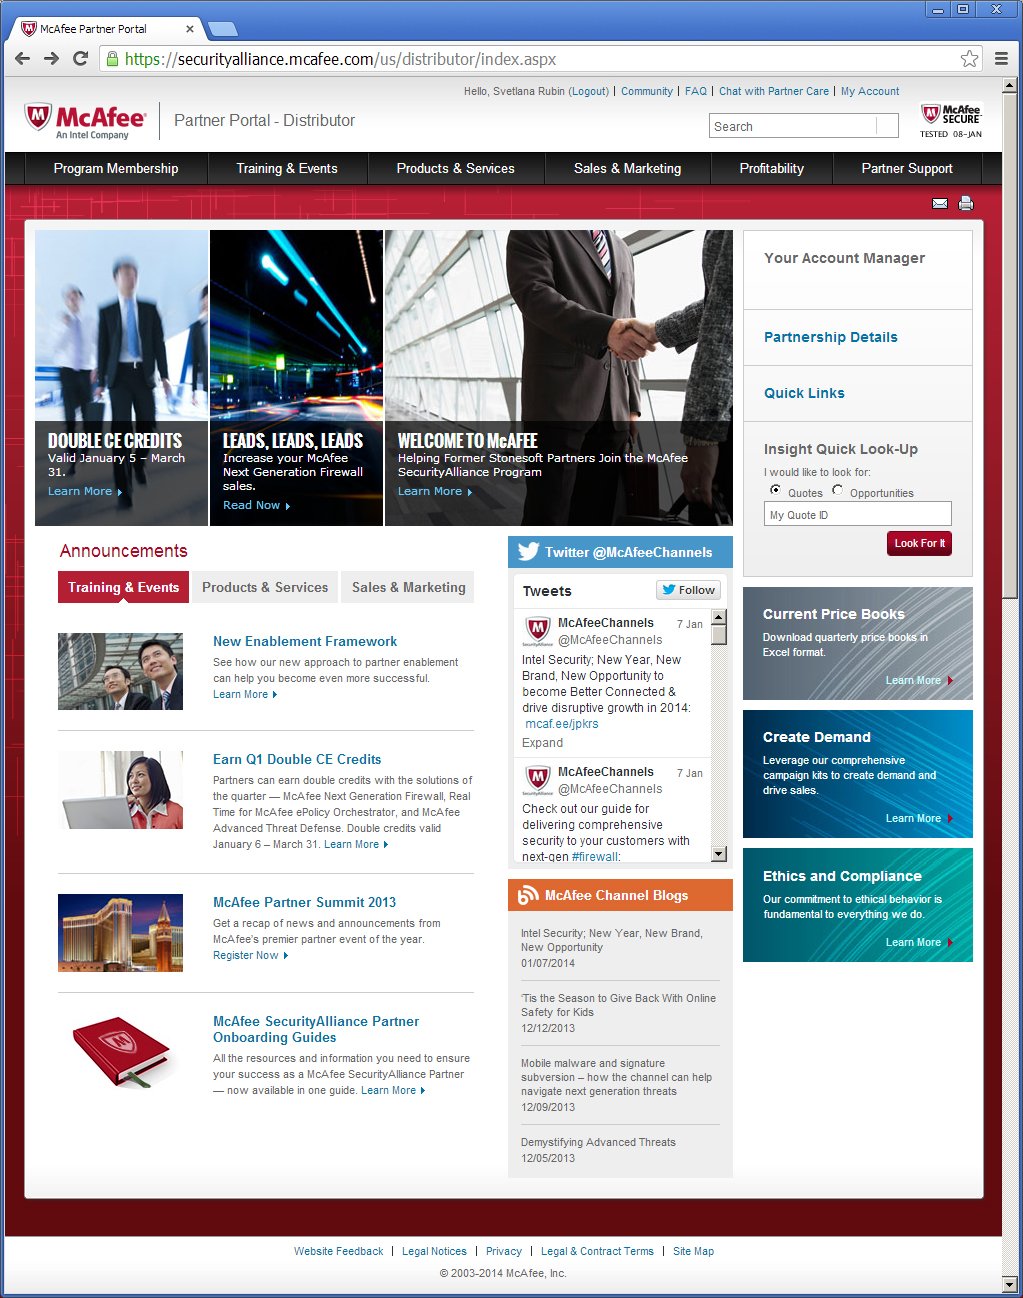 McAfee Partner Portal homepage